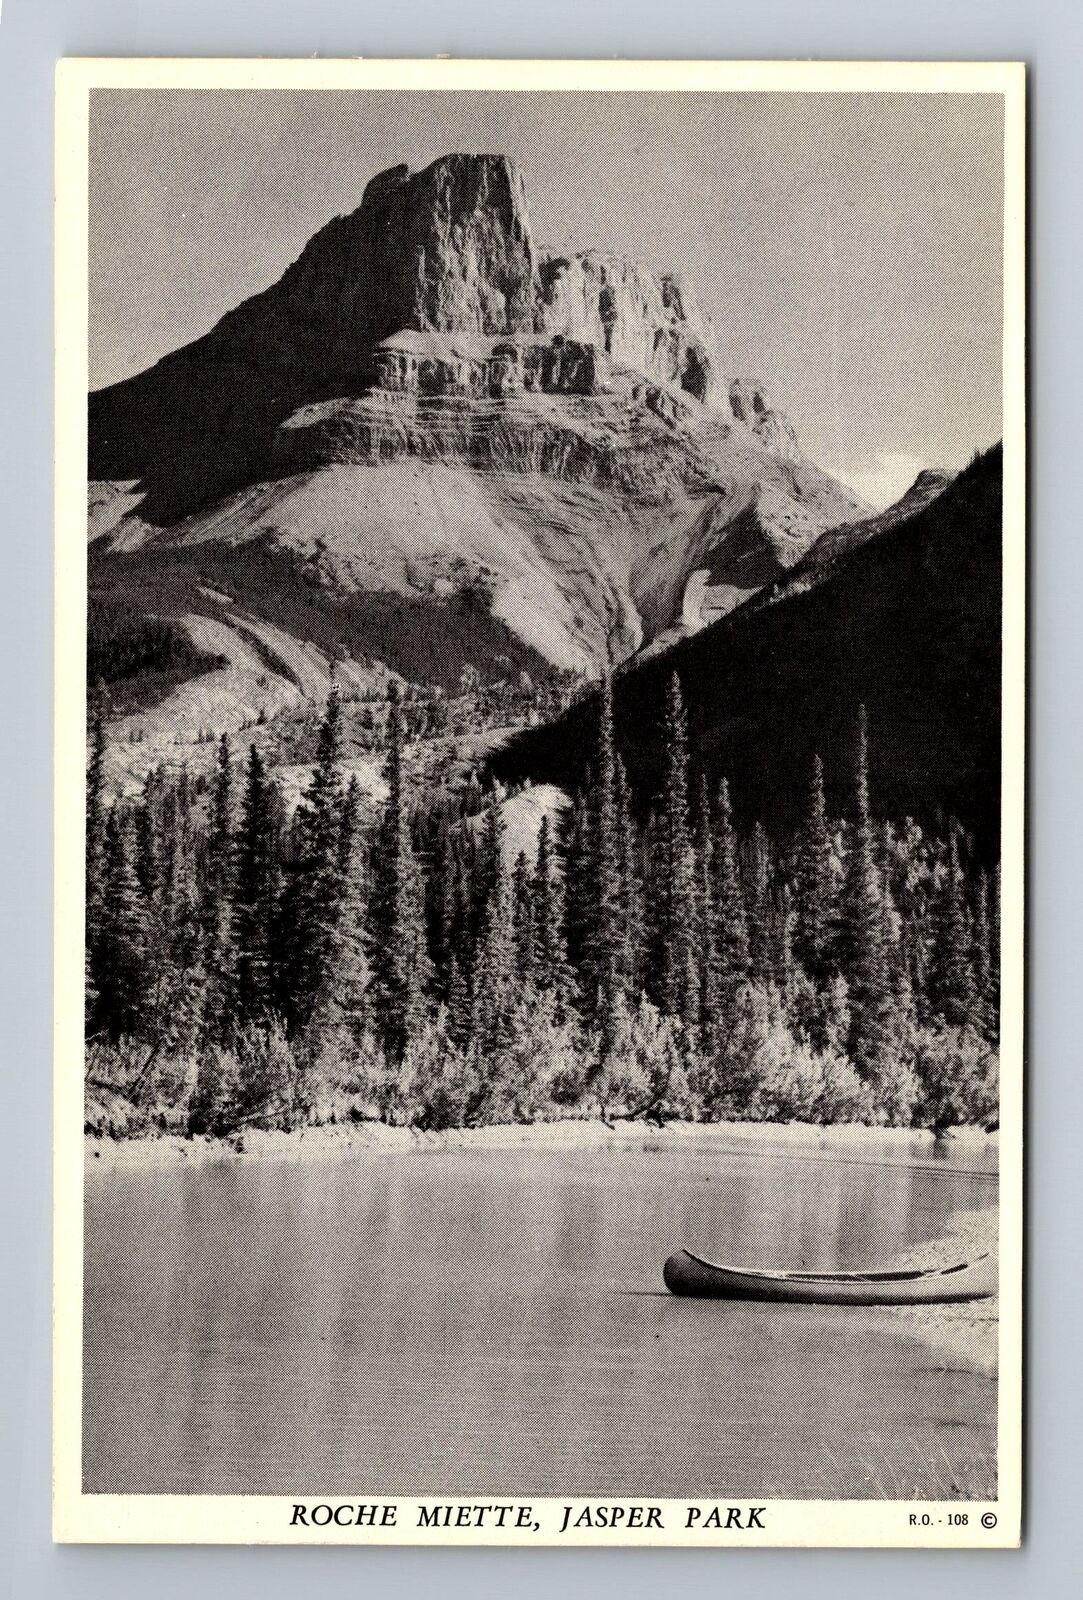 Jasper-Alberta, Roche Miette, Jasper Park, Vintage Postcard